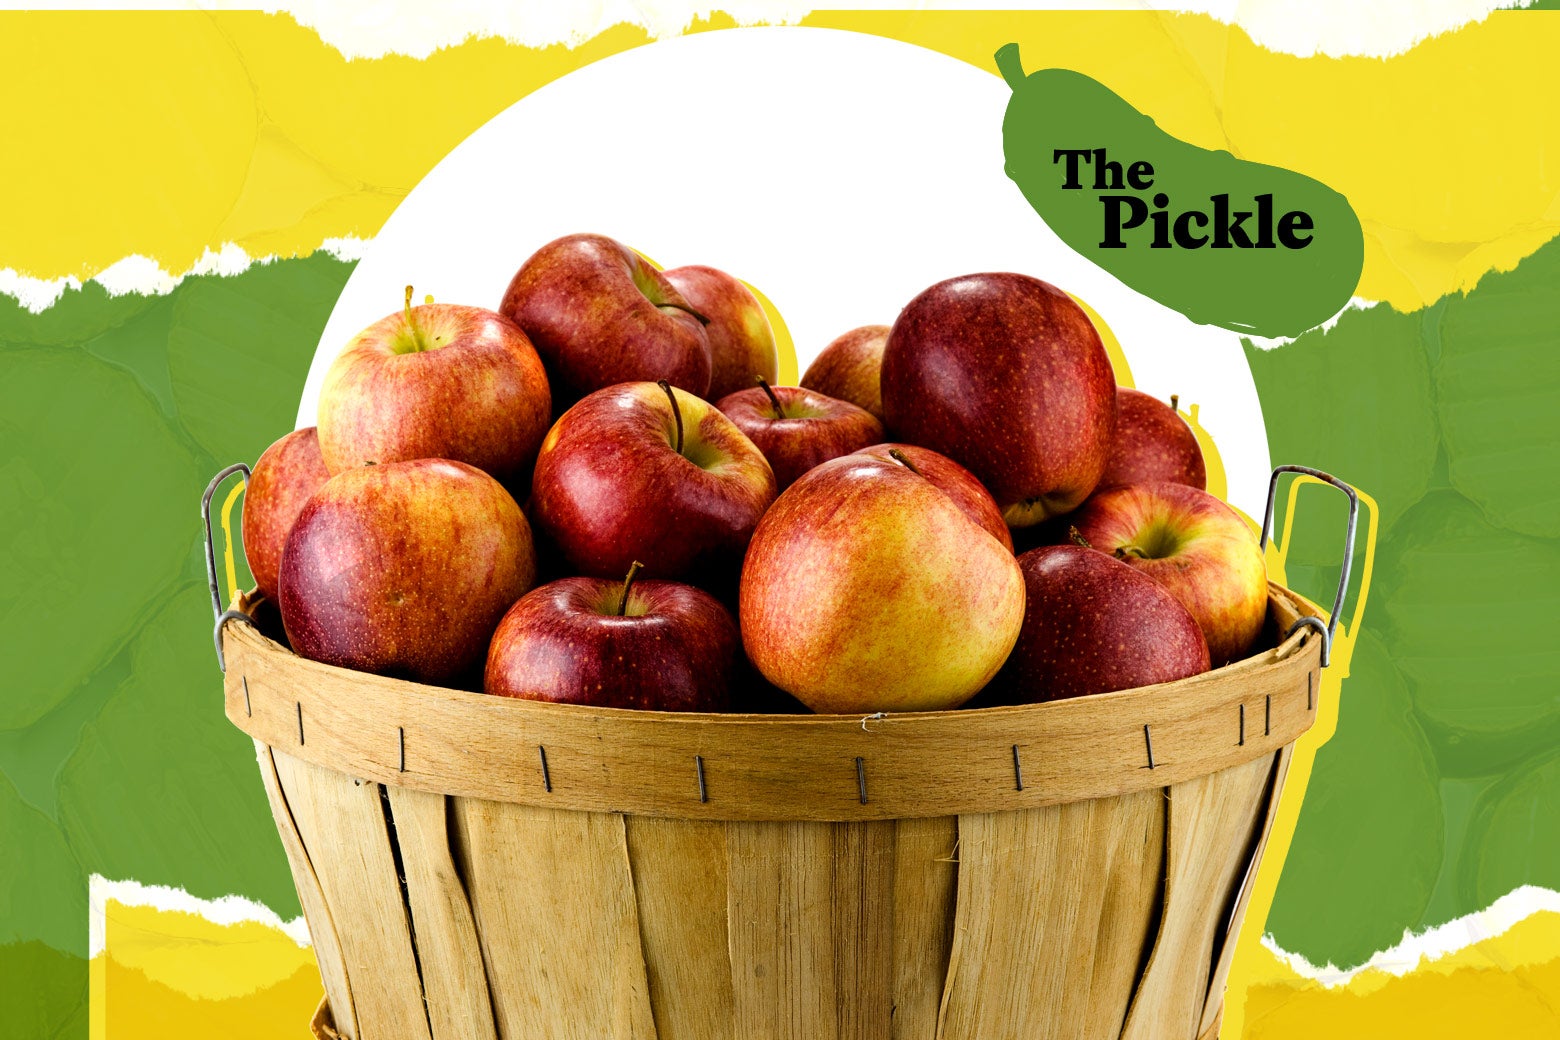 A basket of apples